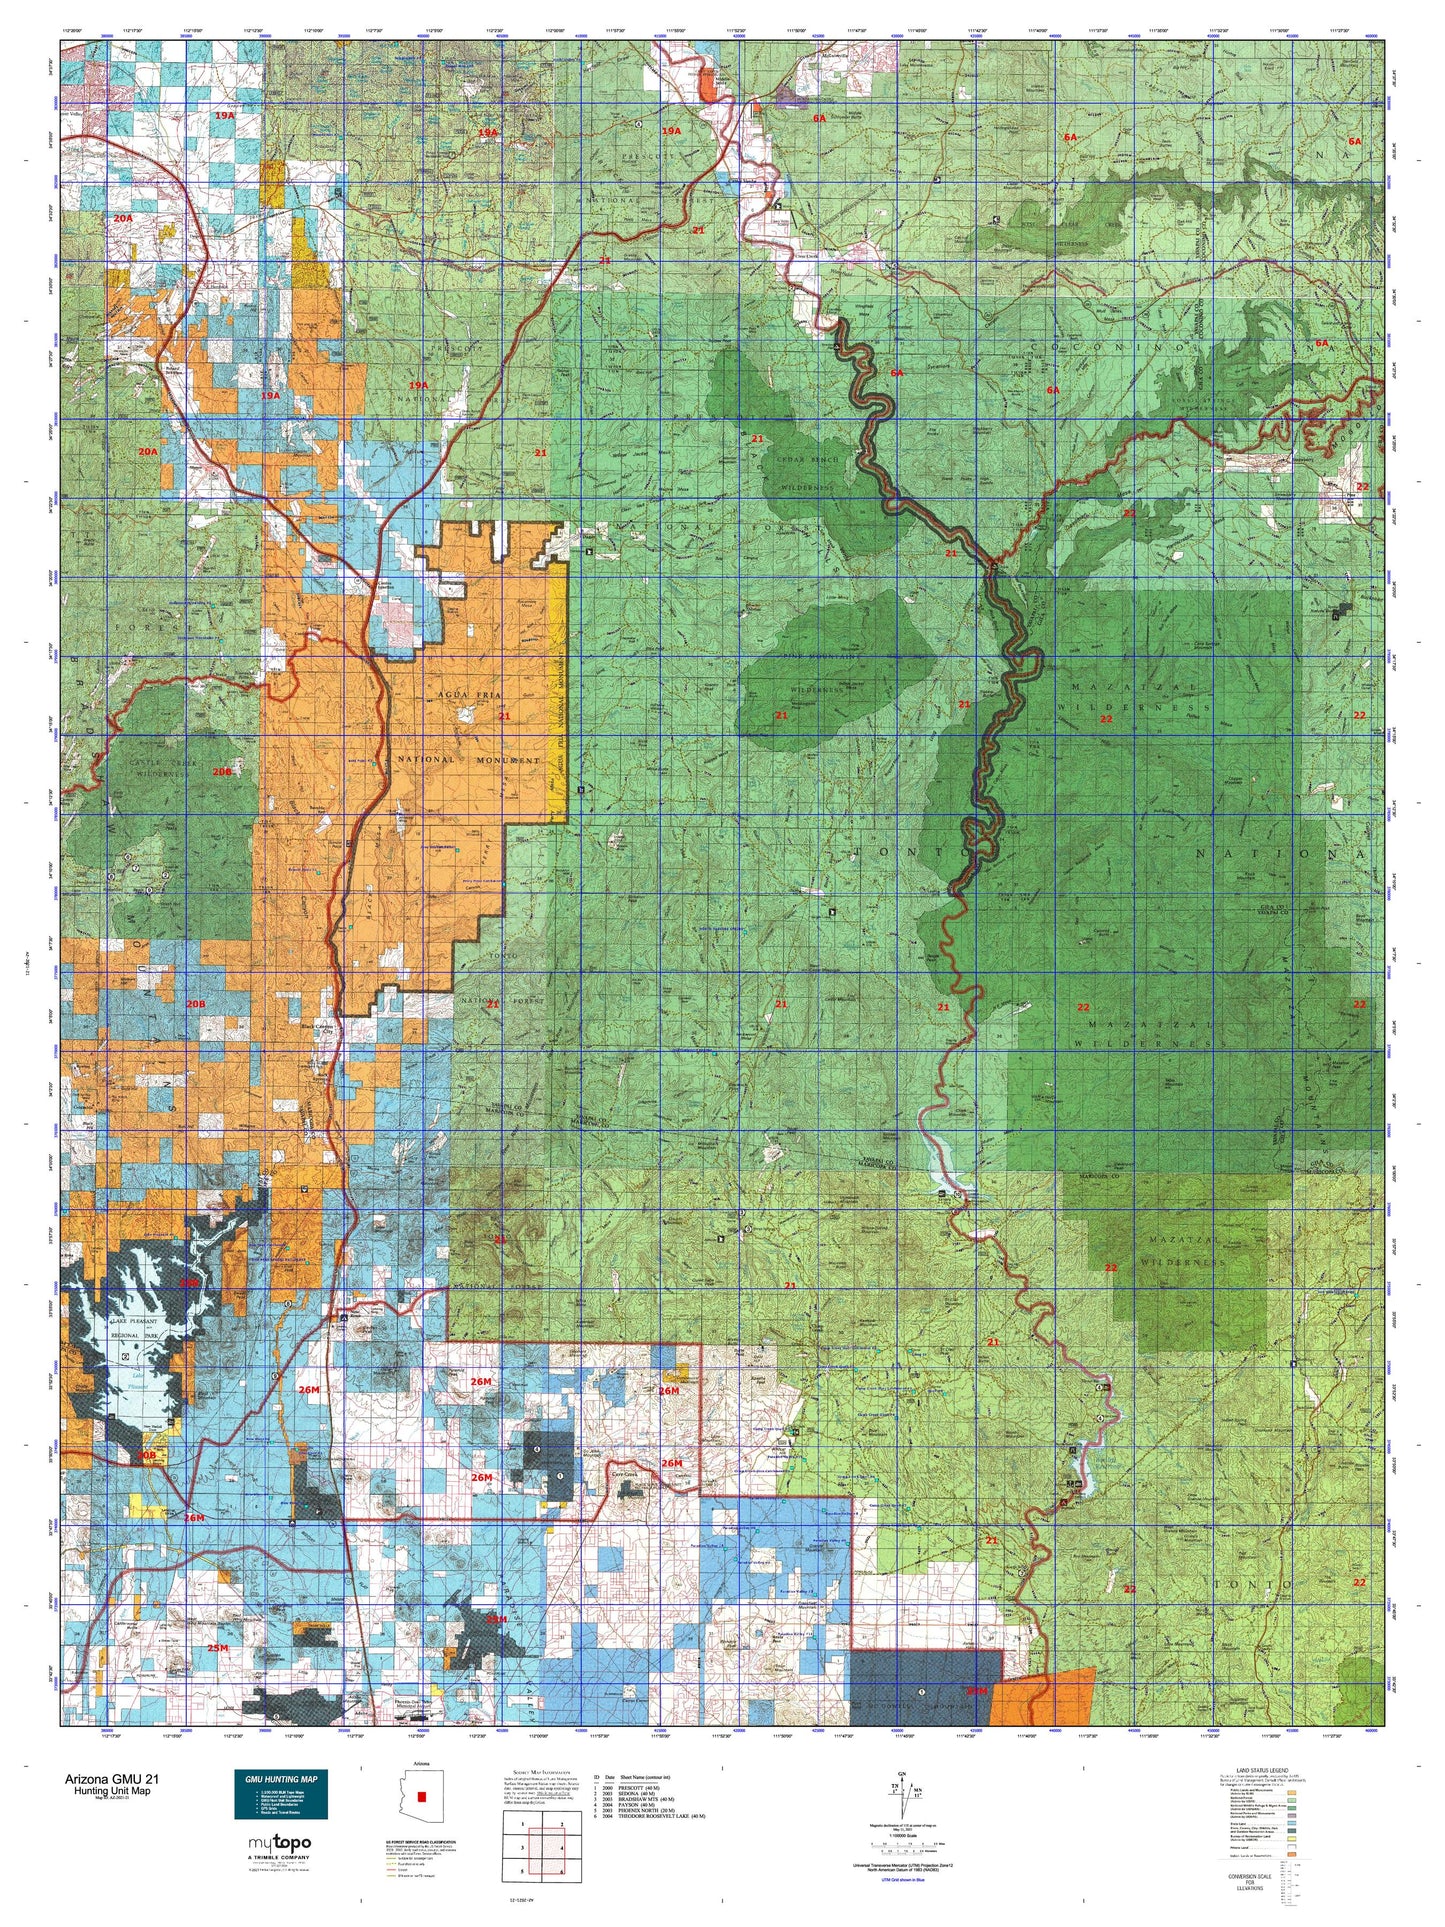 Arizona GMU 21 Map Image